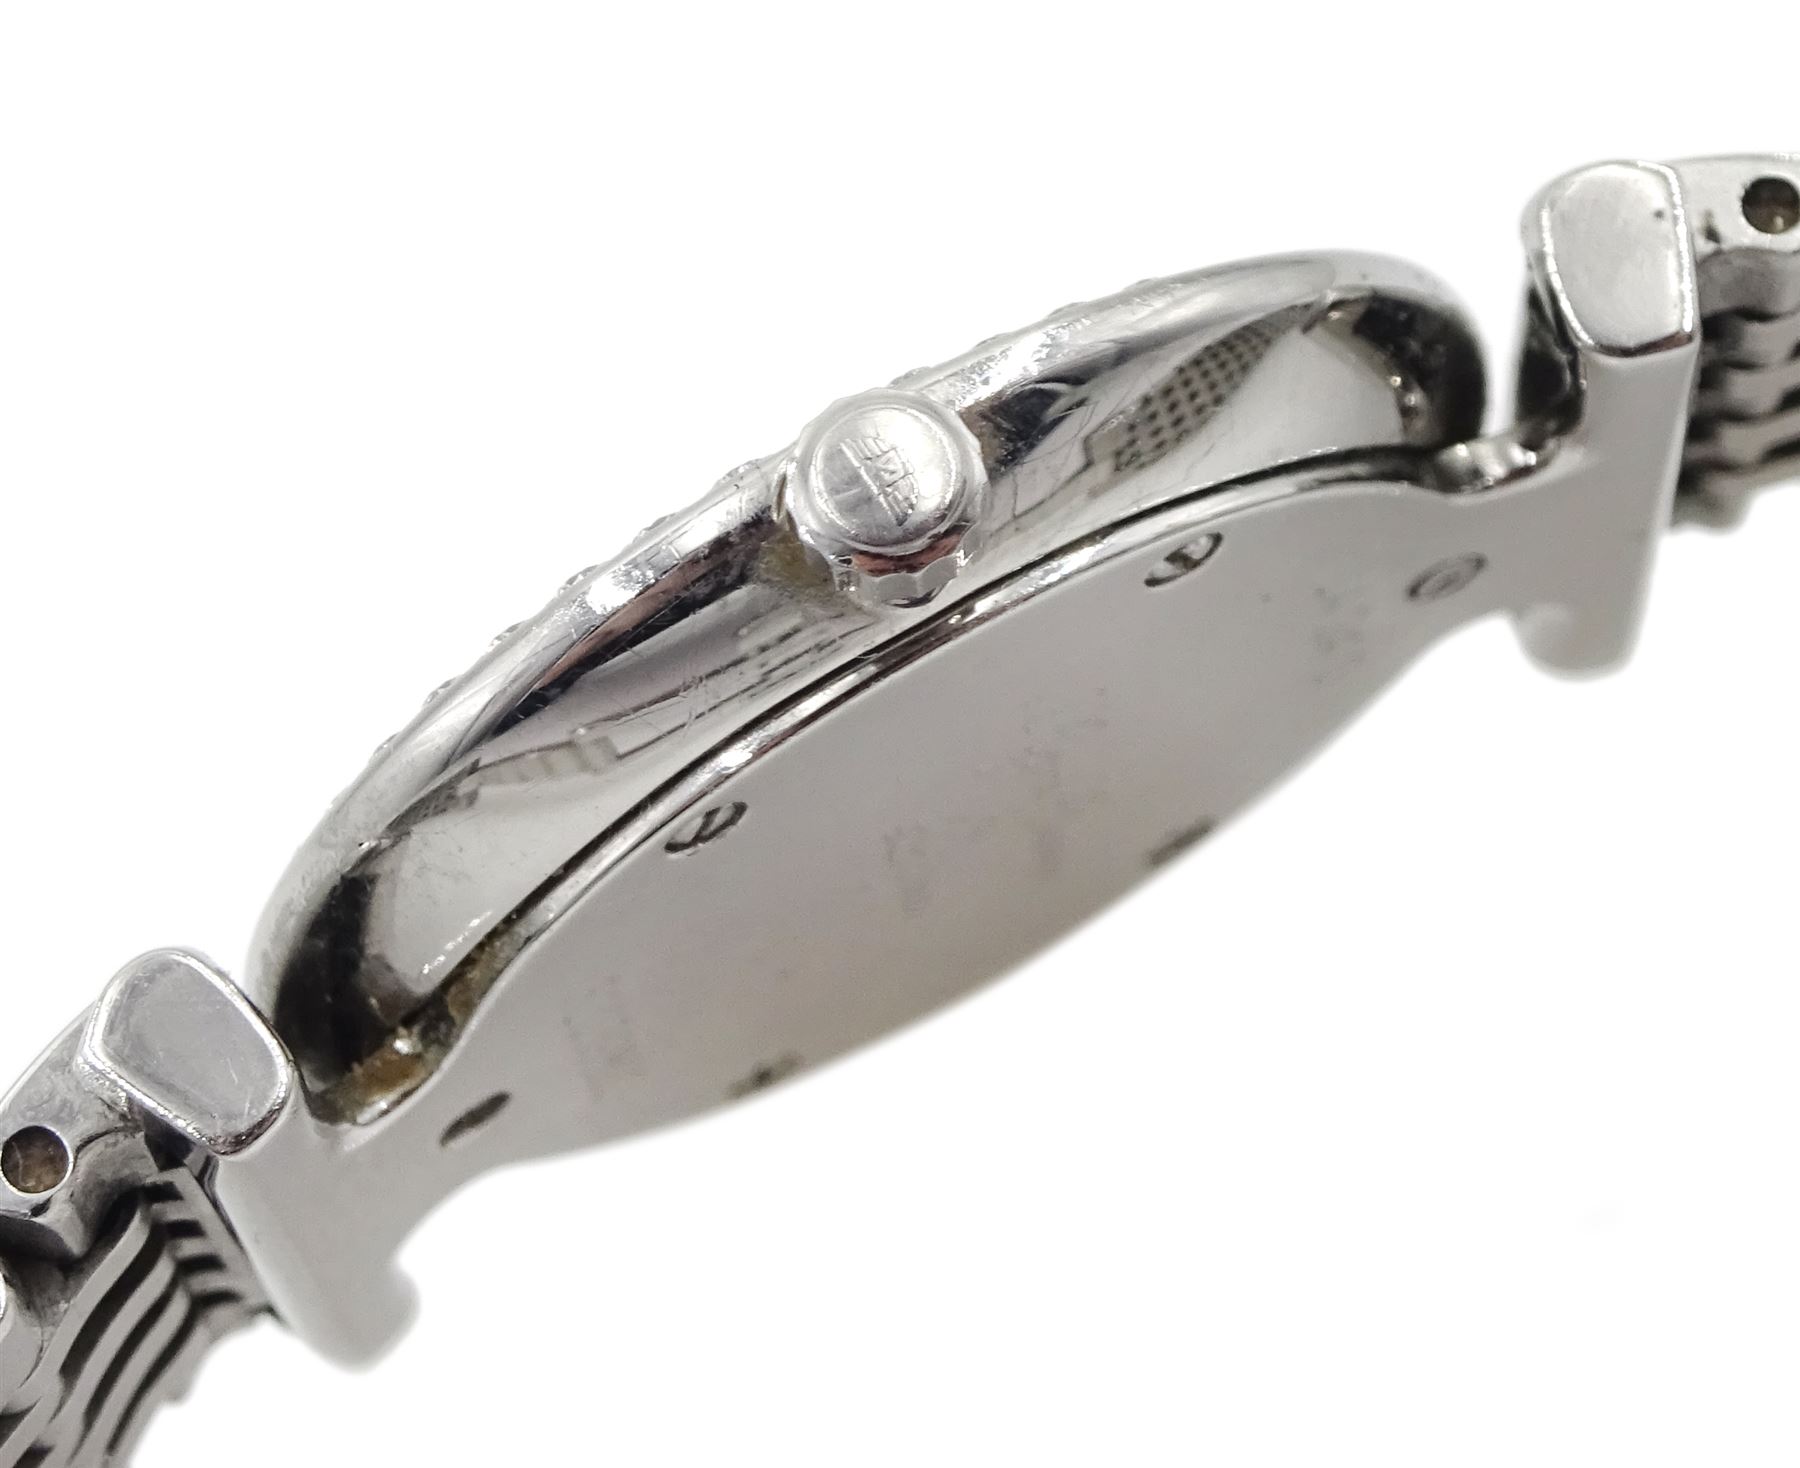 Longines La Grand Classique ladies stainless steel quartz wristwatch with diamond set bezel - Image 6 of 6